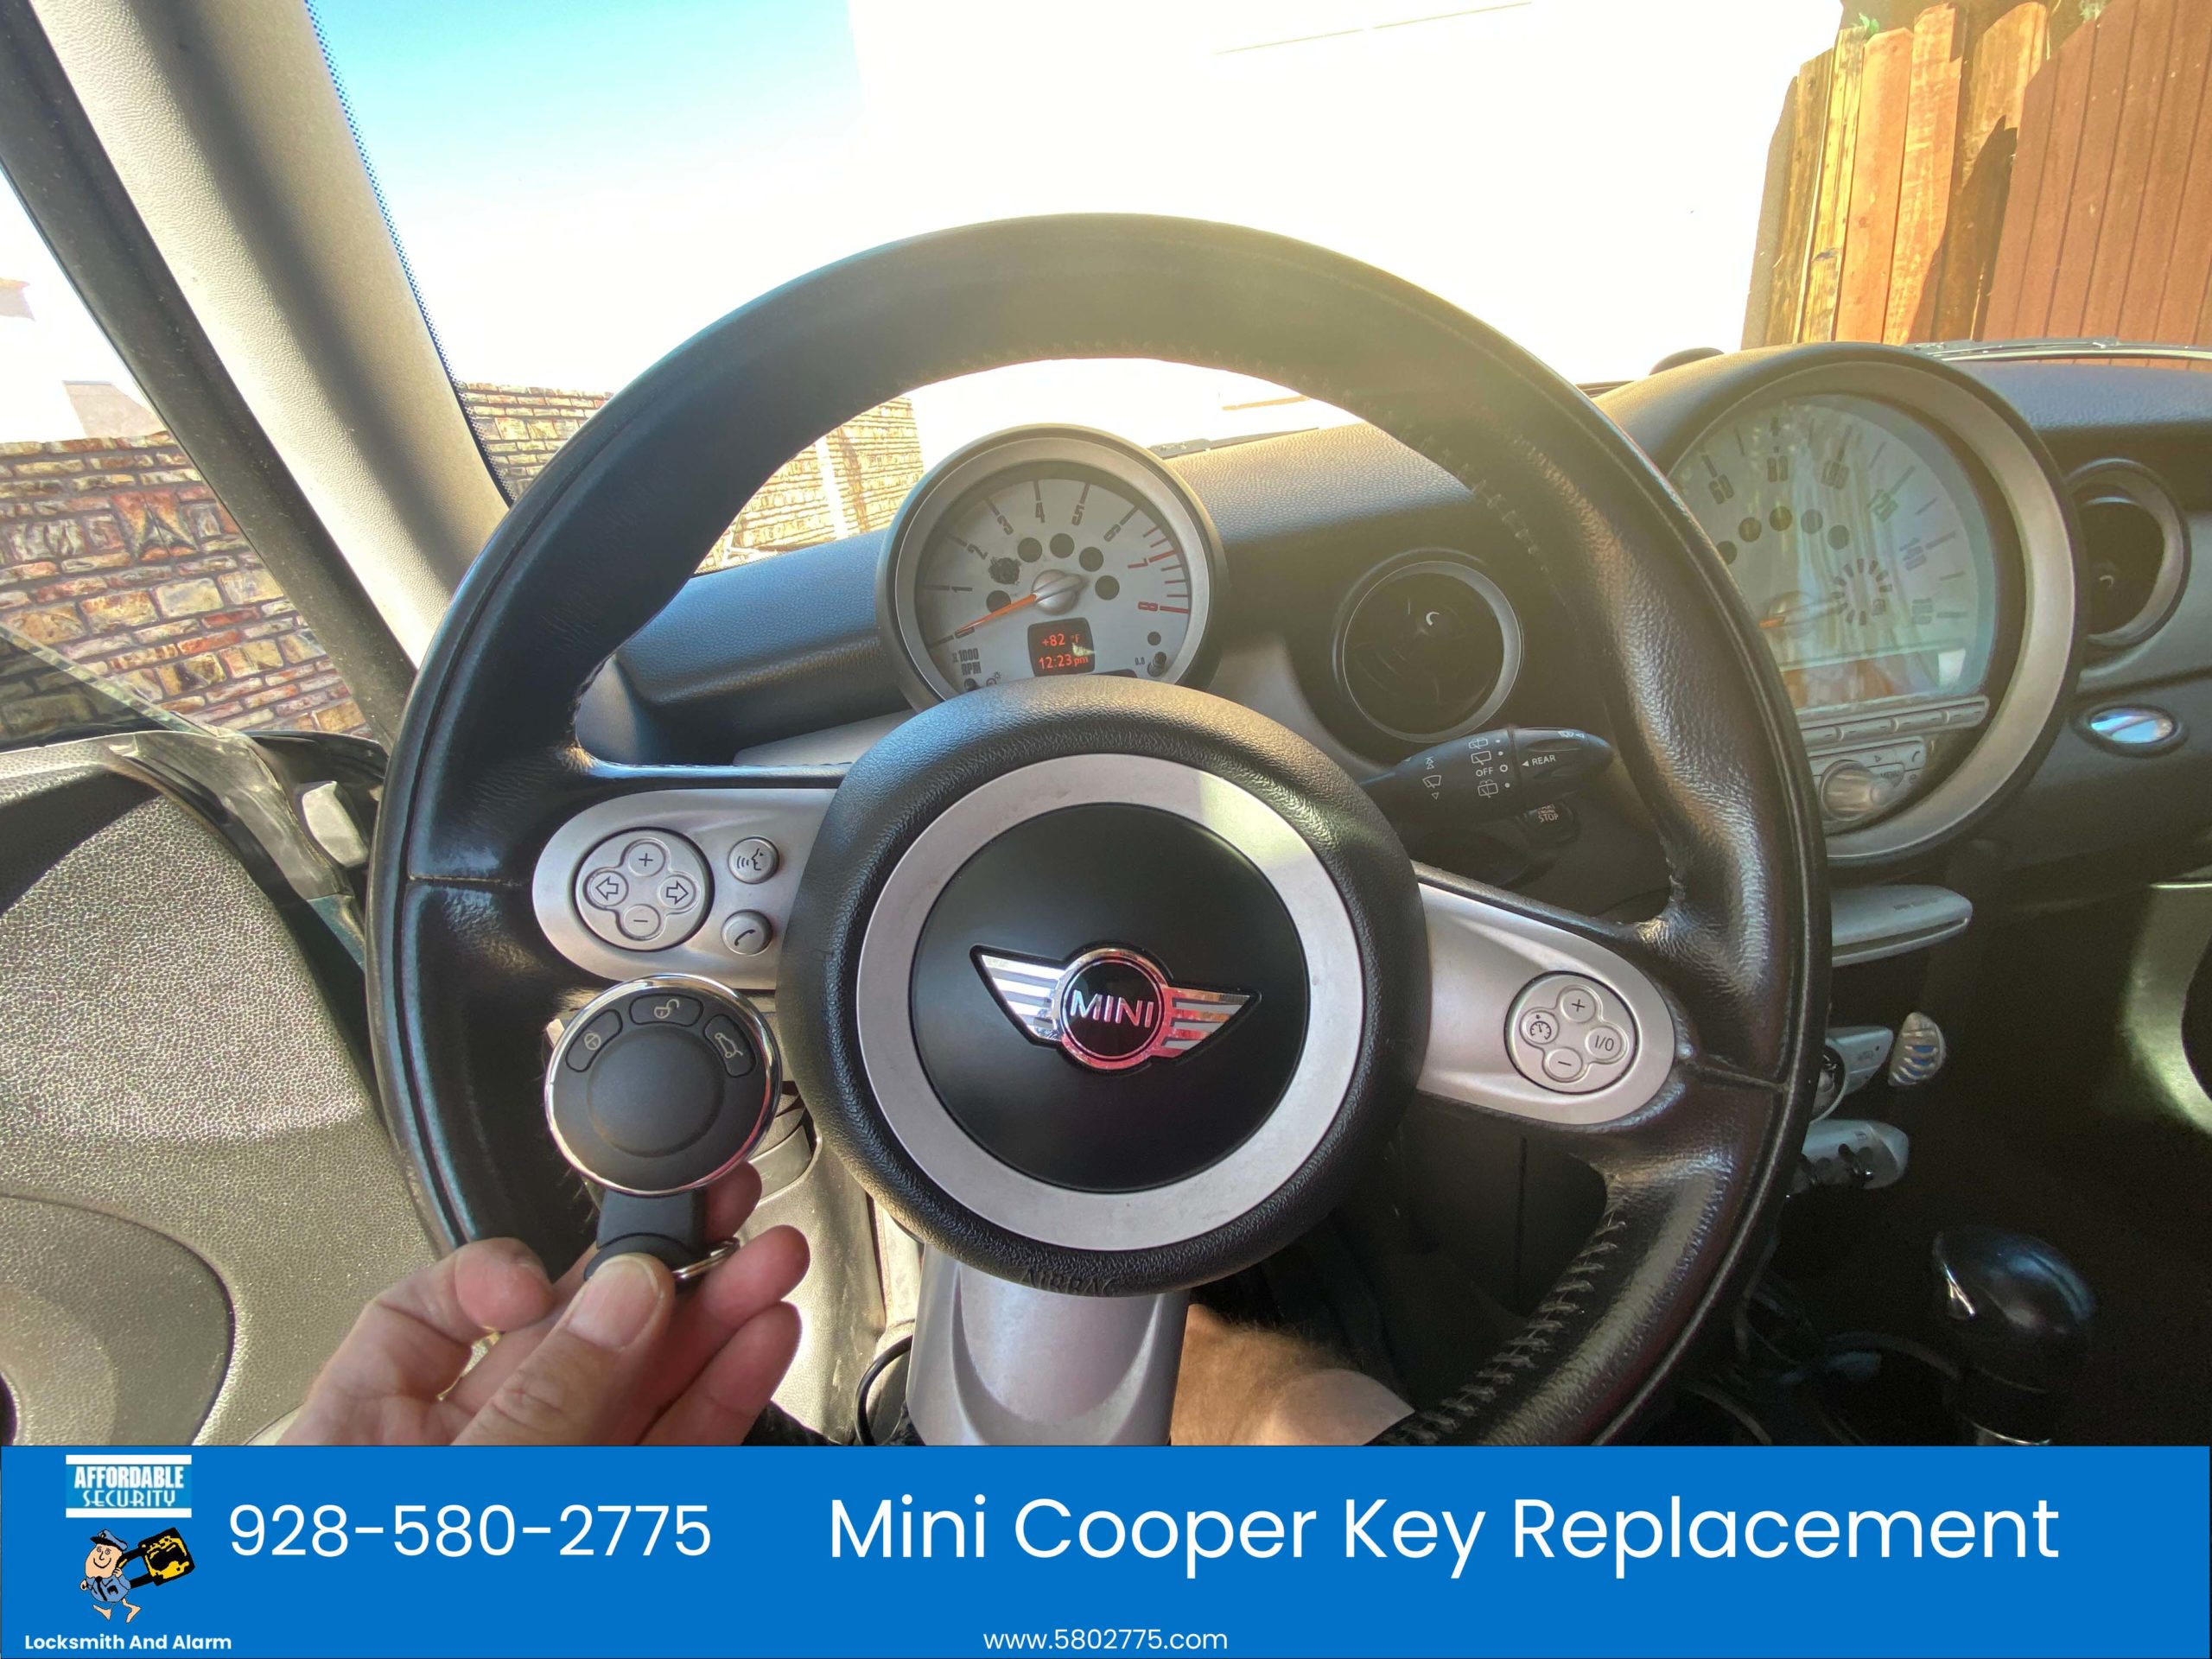 Mini Cooper Key Replacement